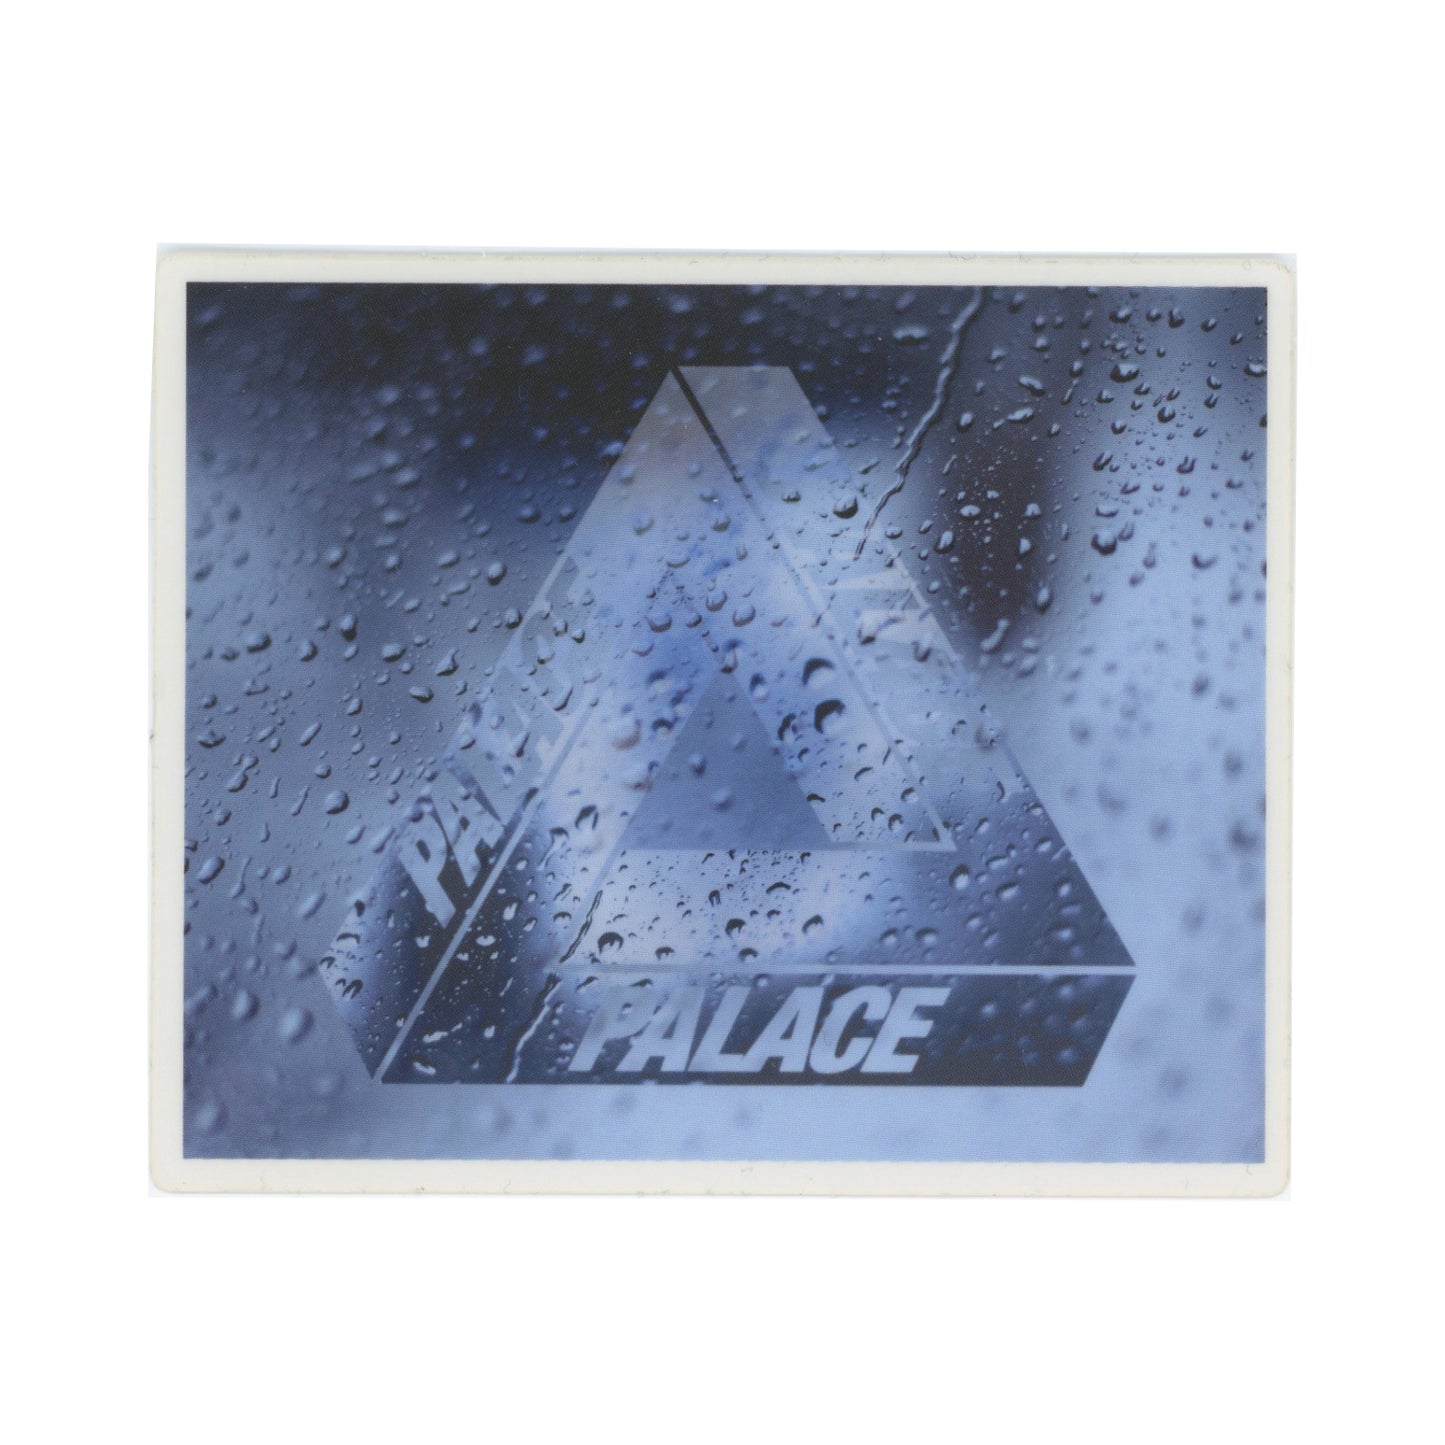 PALACE Foggy Glass Sticker